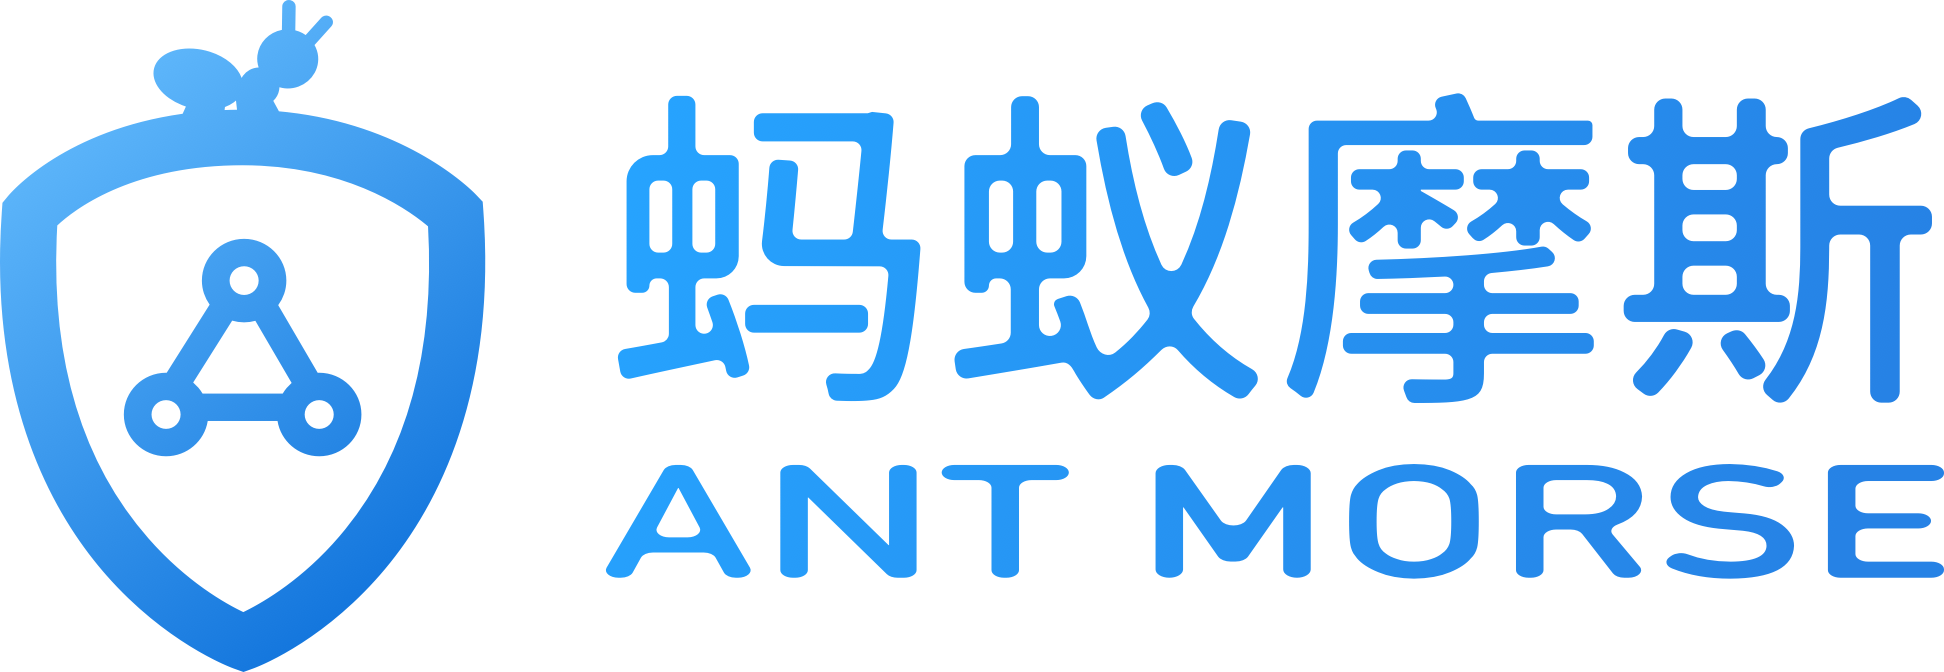 Ant Chain Morse